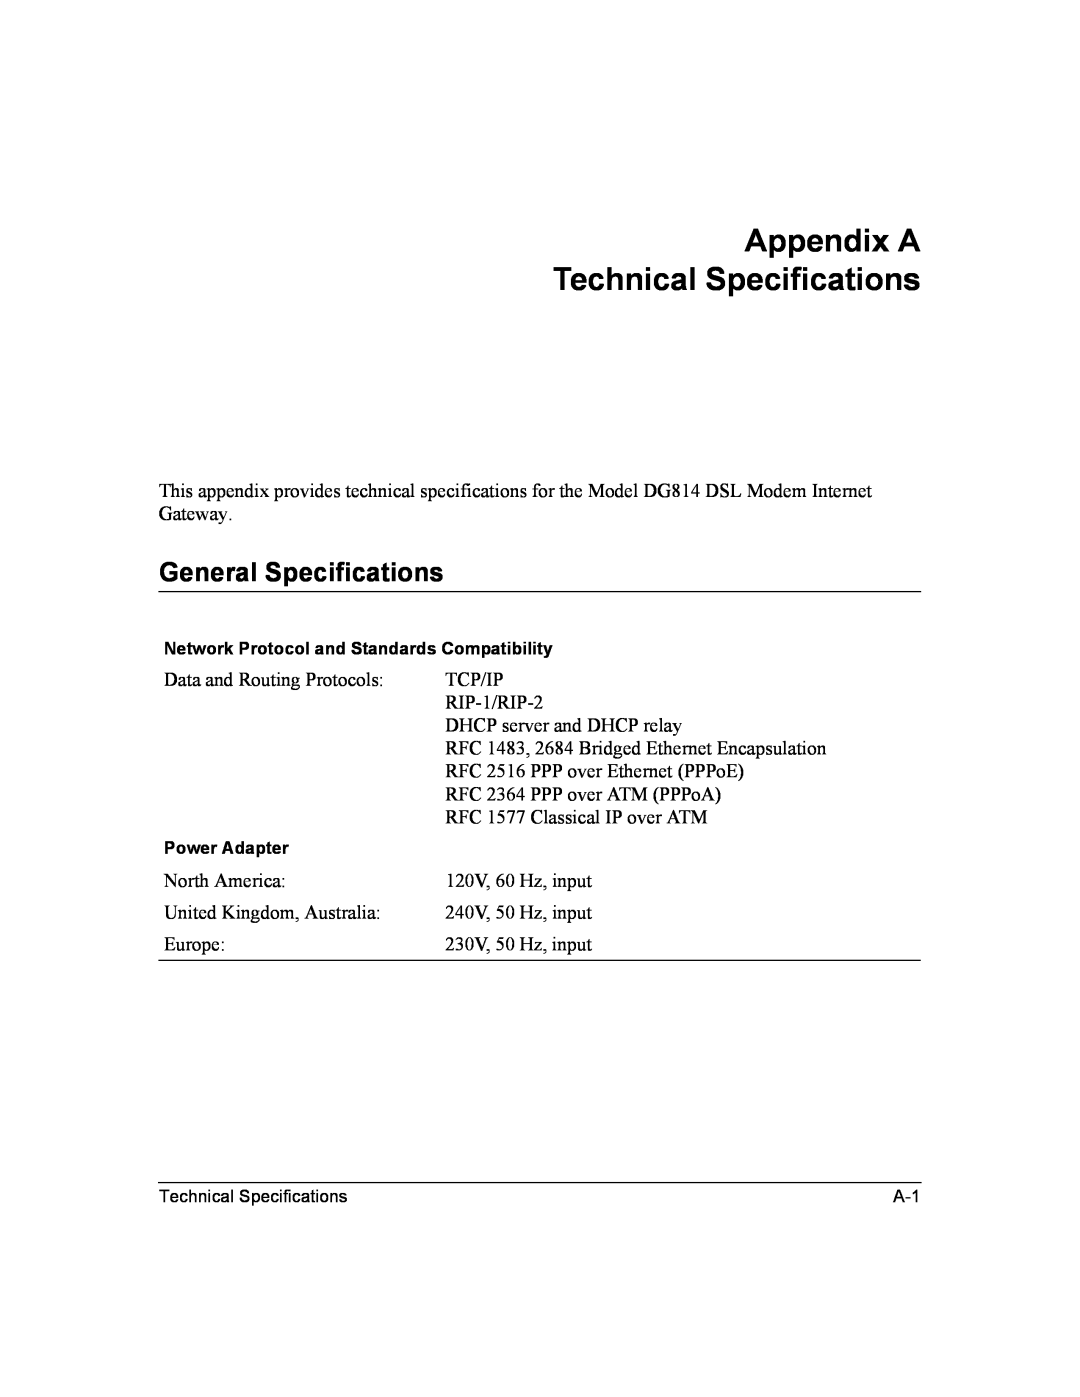 NETGEAR DG814 DSL manual Appendix A Technical Specifications, General Specifications 